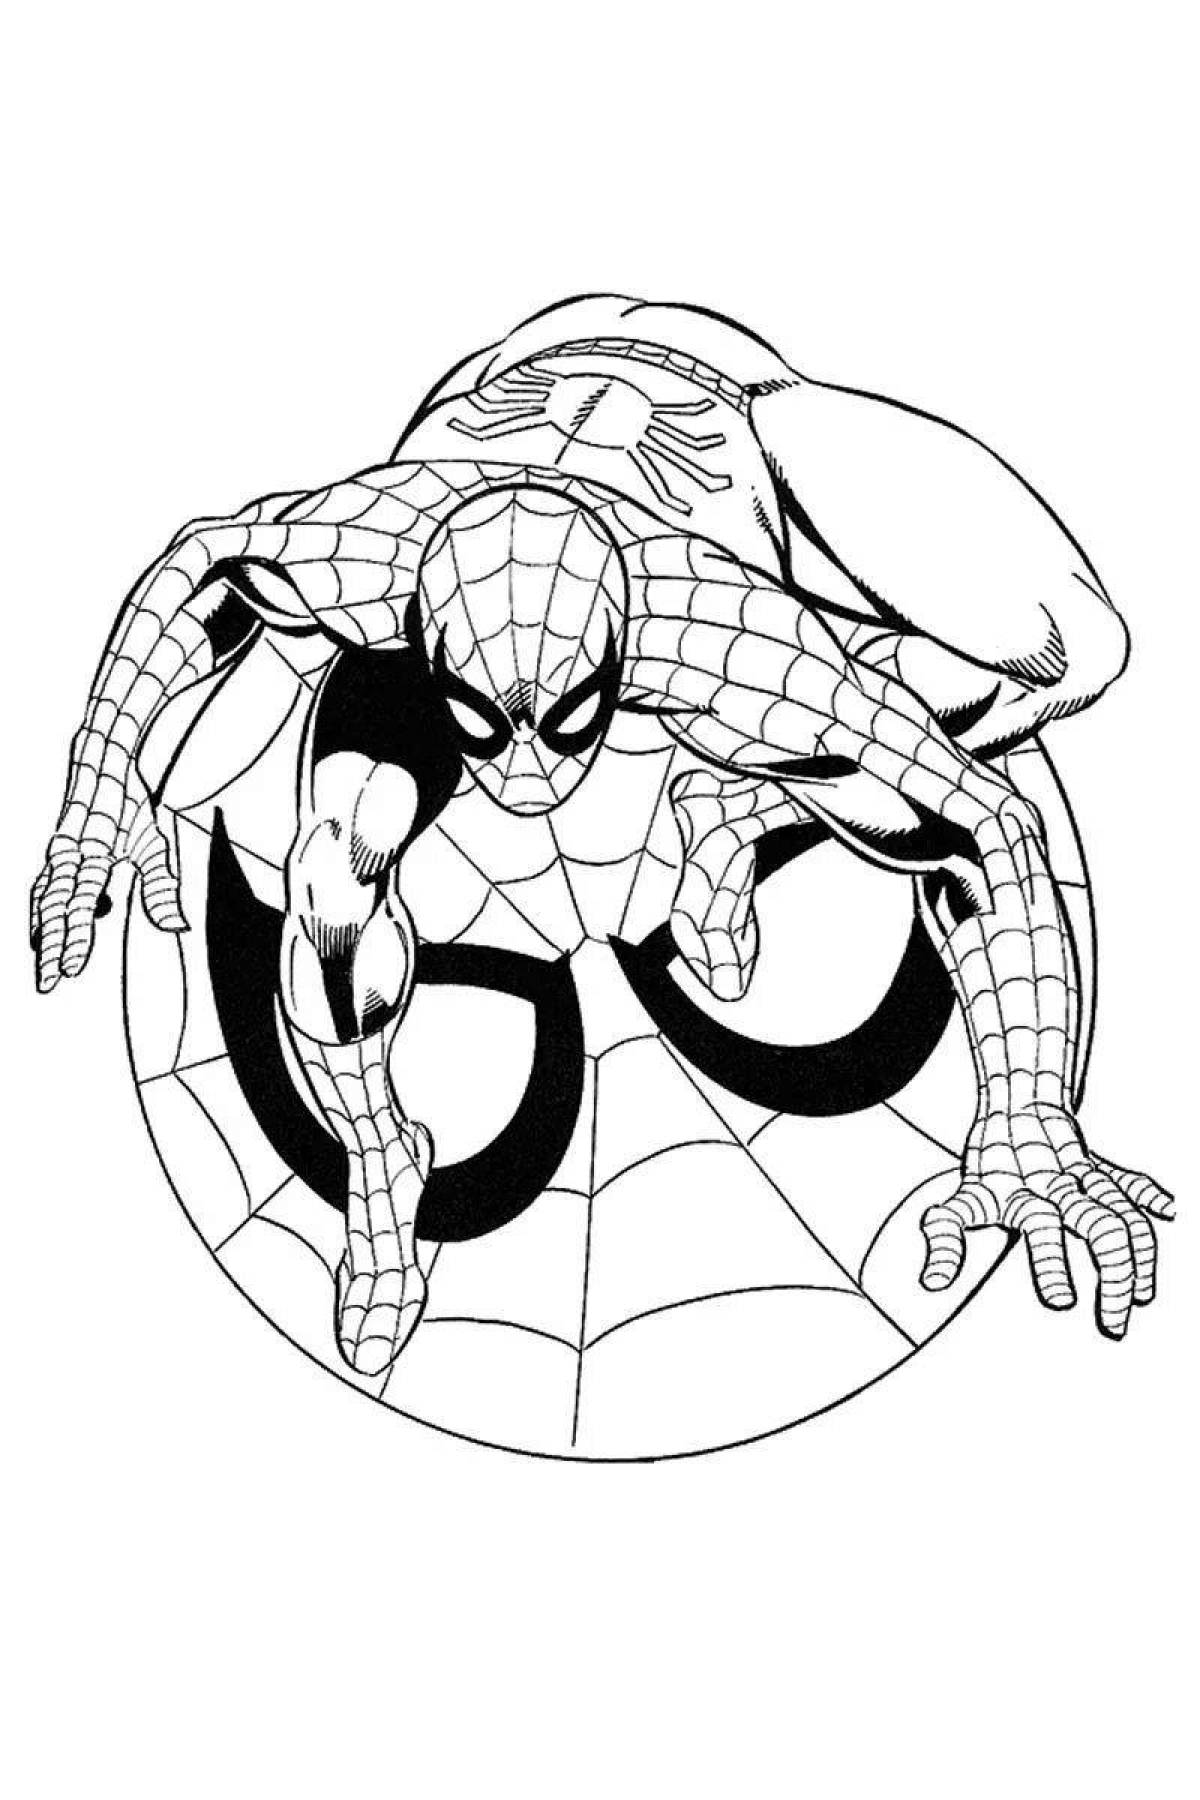 Spider-Man humorous coloring book